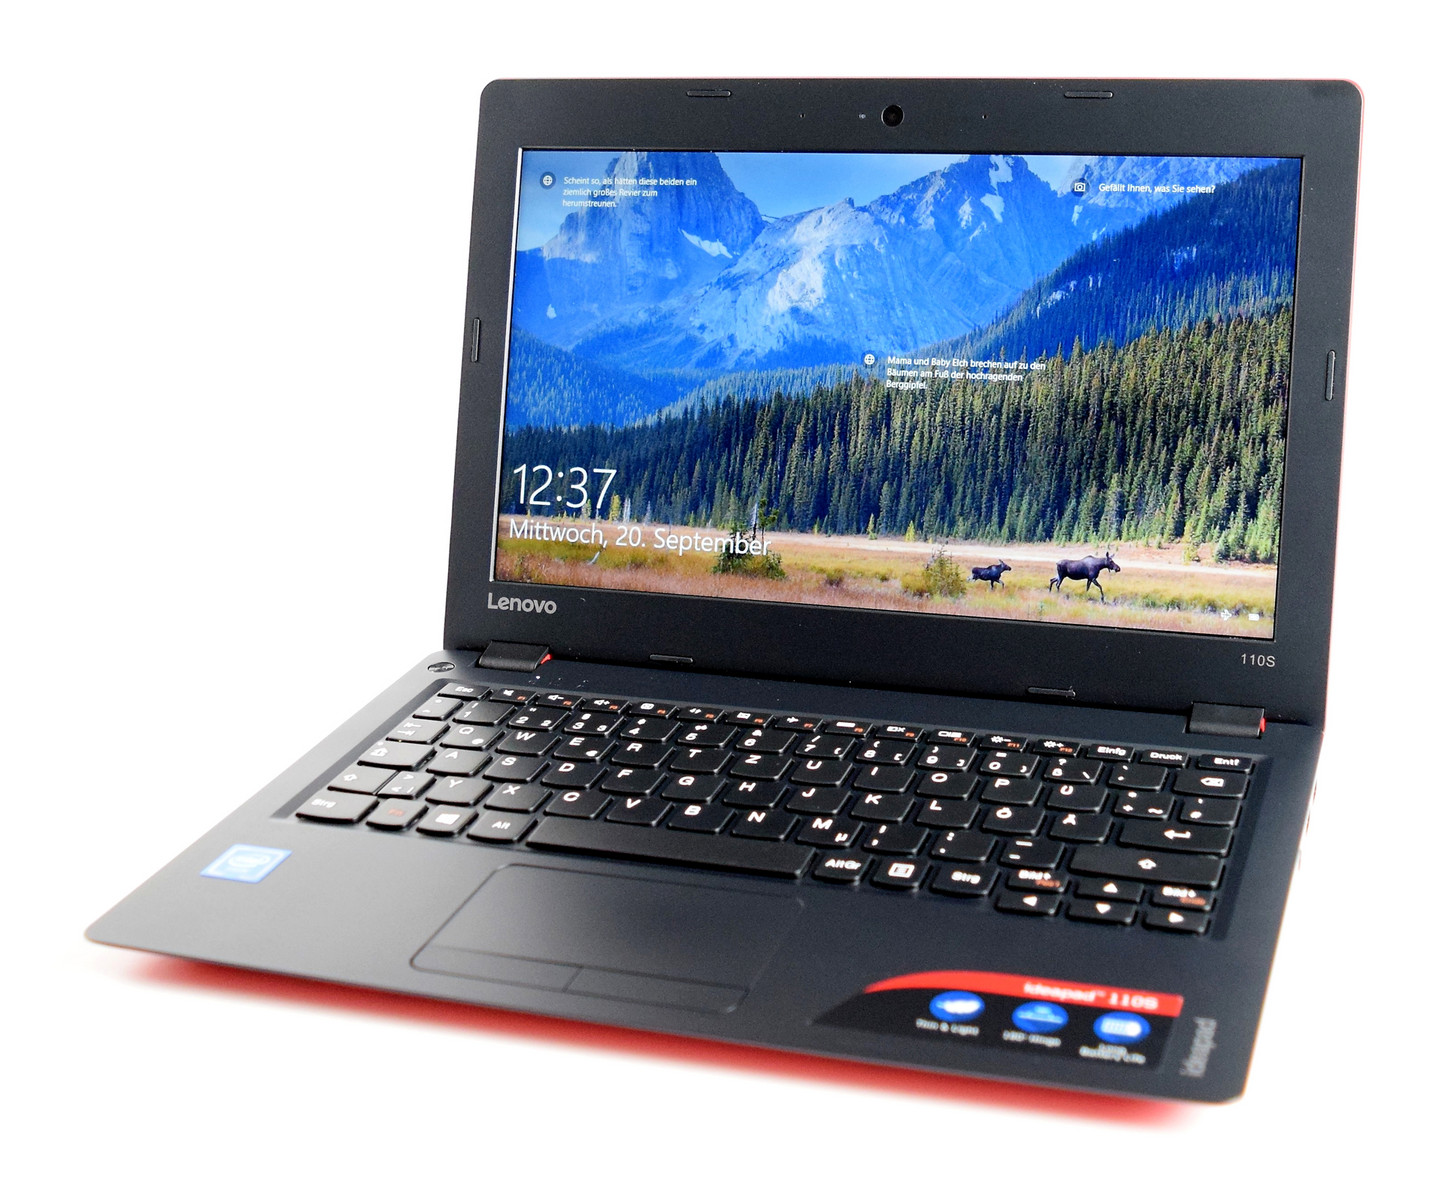 Lenovo Ideapad 110S-11IBR - Notebookcheck.net External Reviews